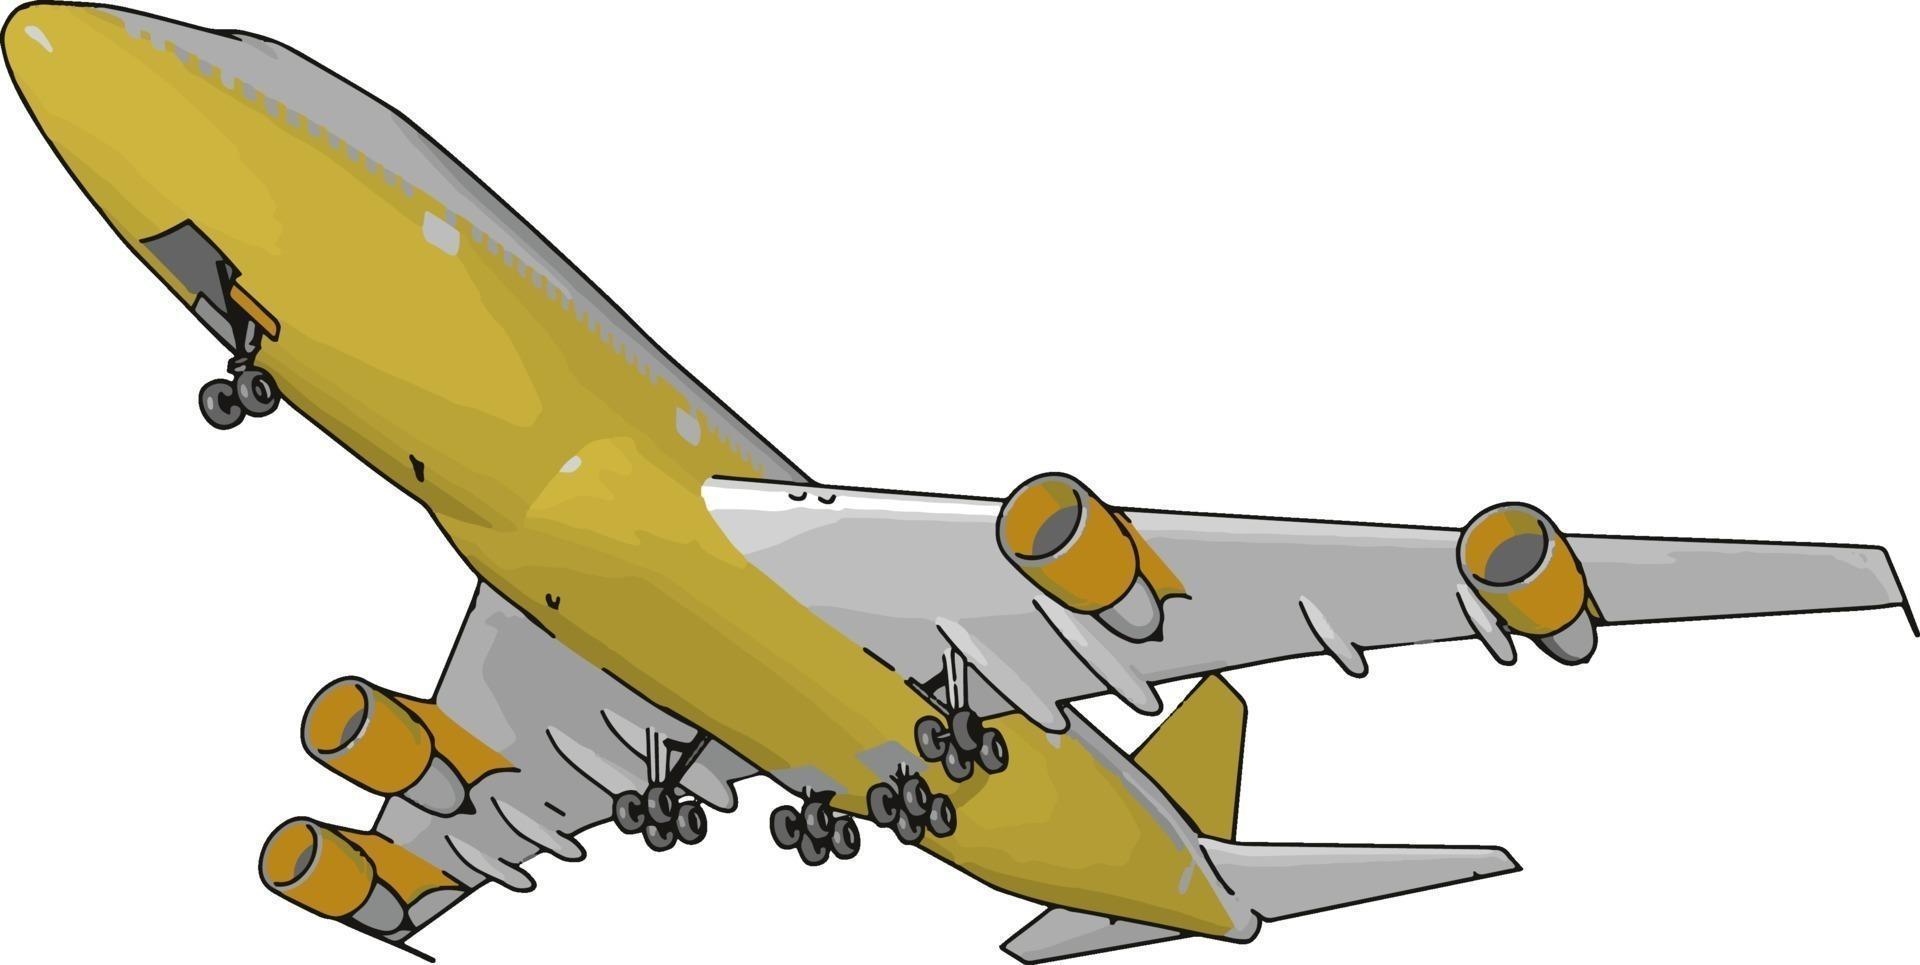 Yellow passenger plane, illustration, vector on white background.